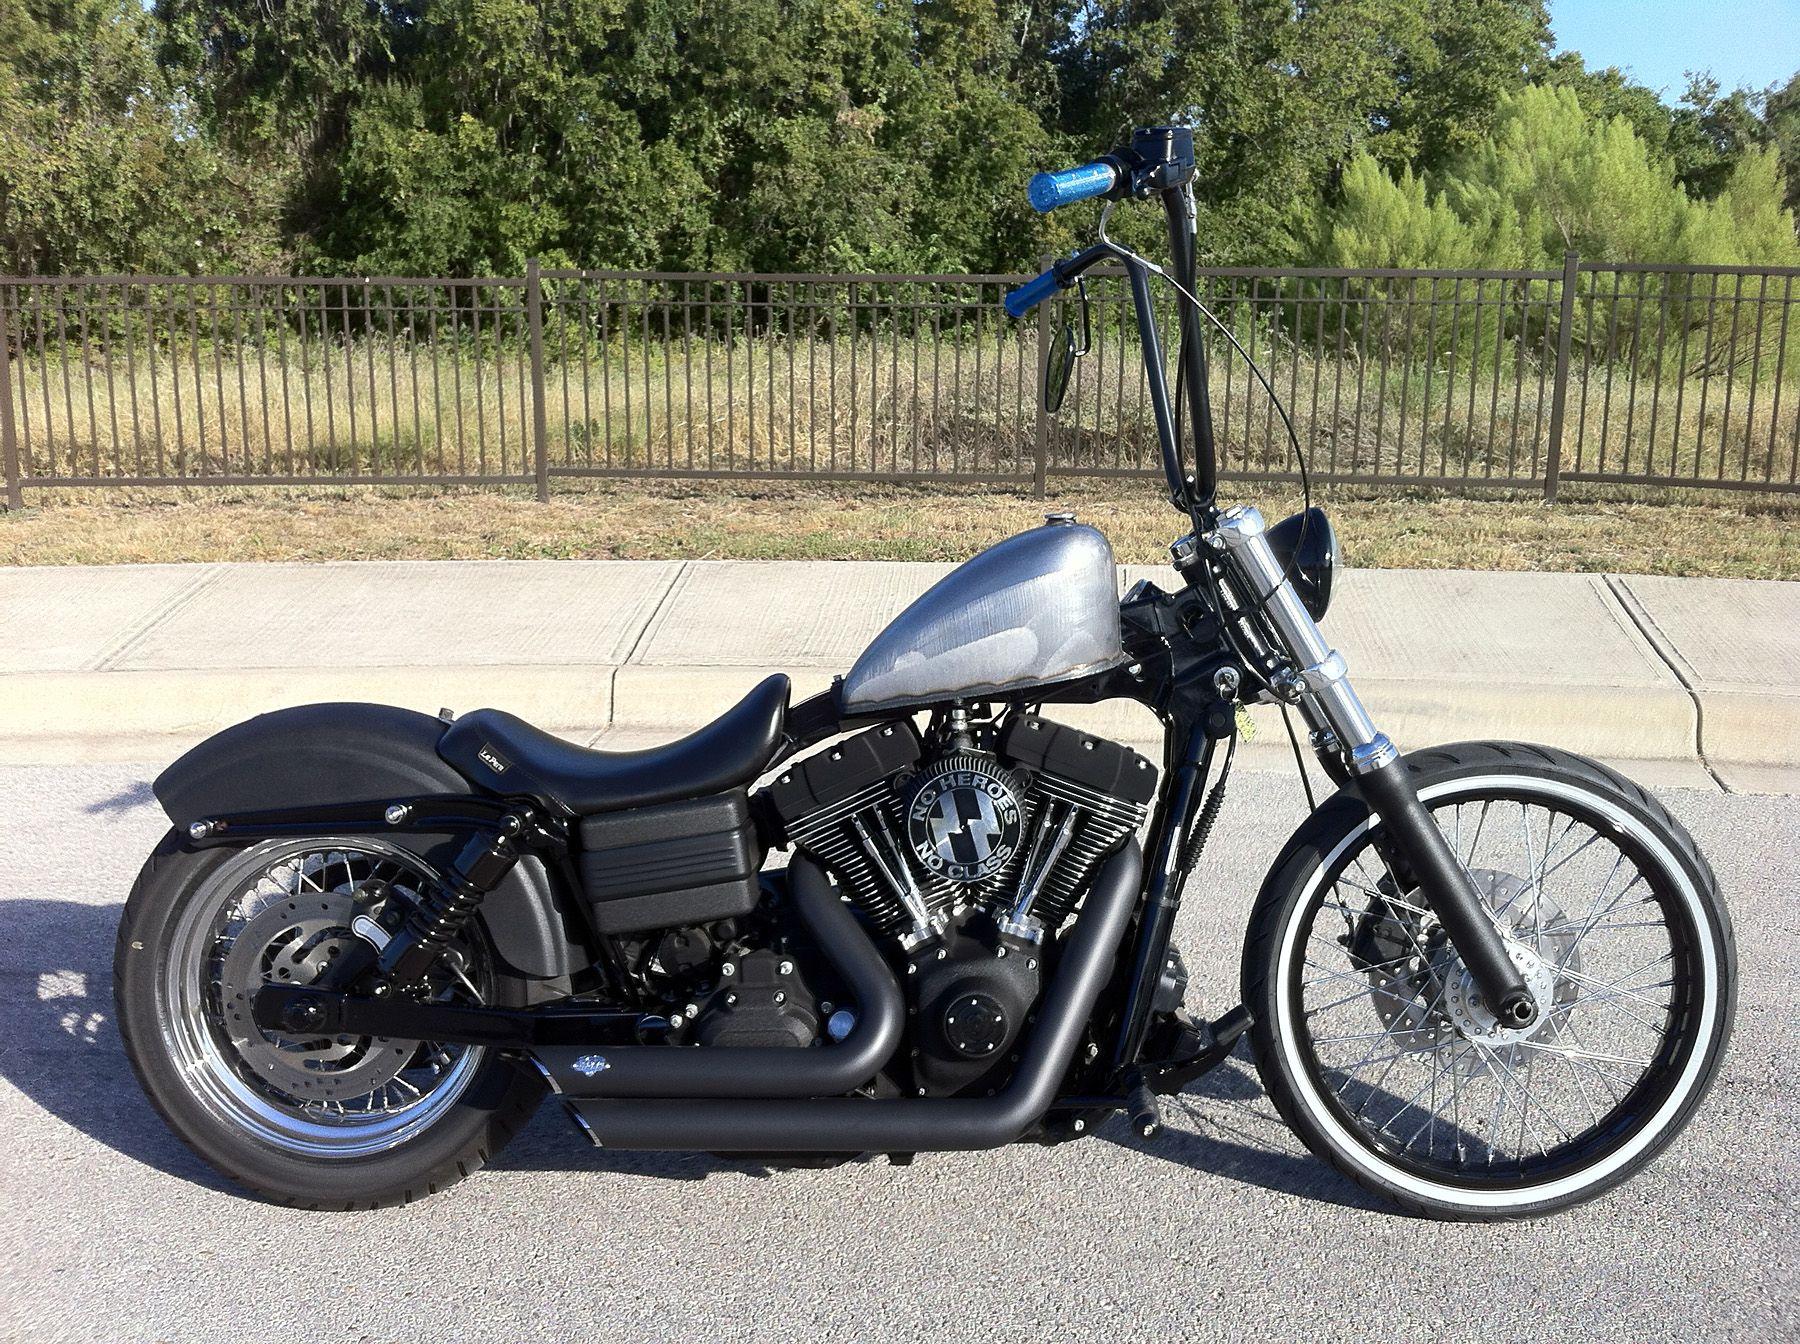 Harley Davidson Bagger Wallpapers Top Free Harley Davidson Bagger Backgrounds Wallpaperaccess